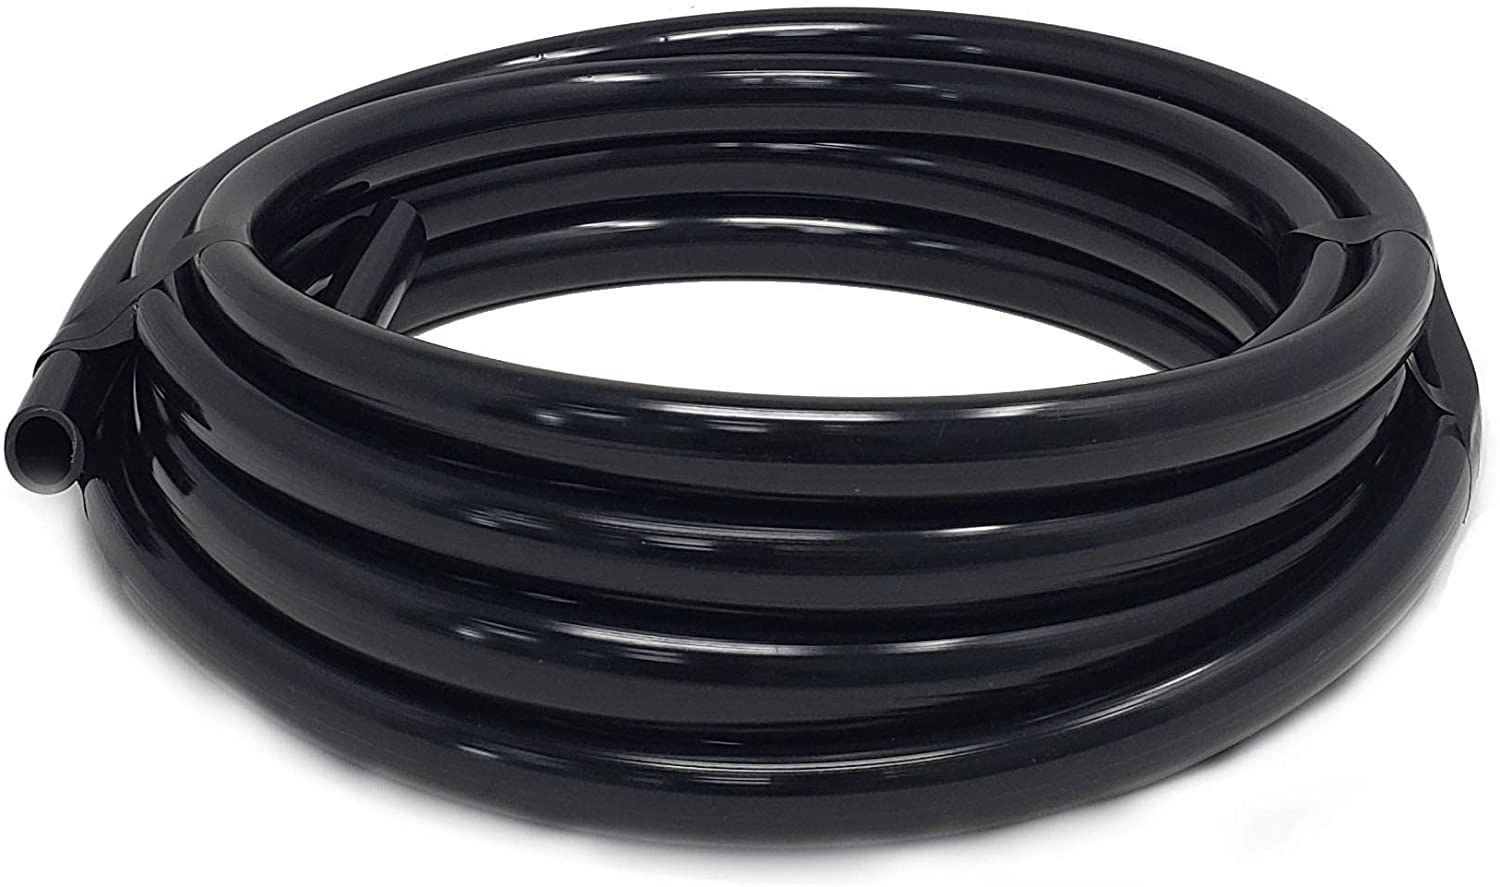 1/2 Inch Vinyl Pond Tubing, 20 FT, Black, Made in USA, UV Resistant, Fish Safe